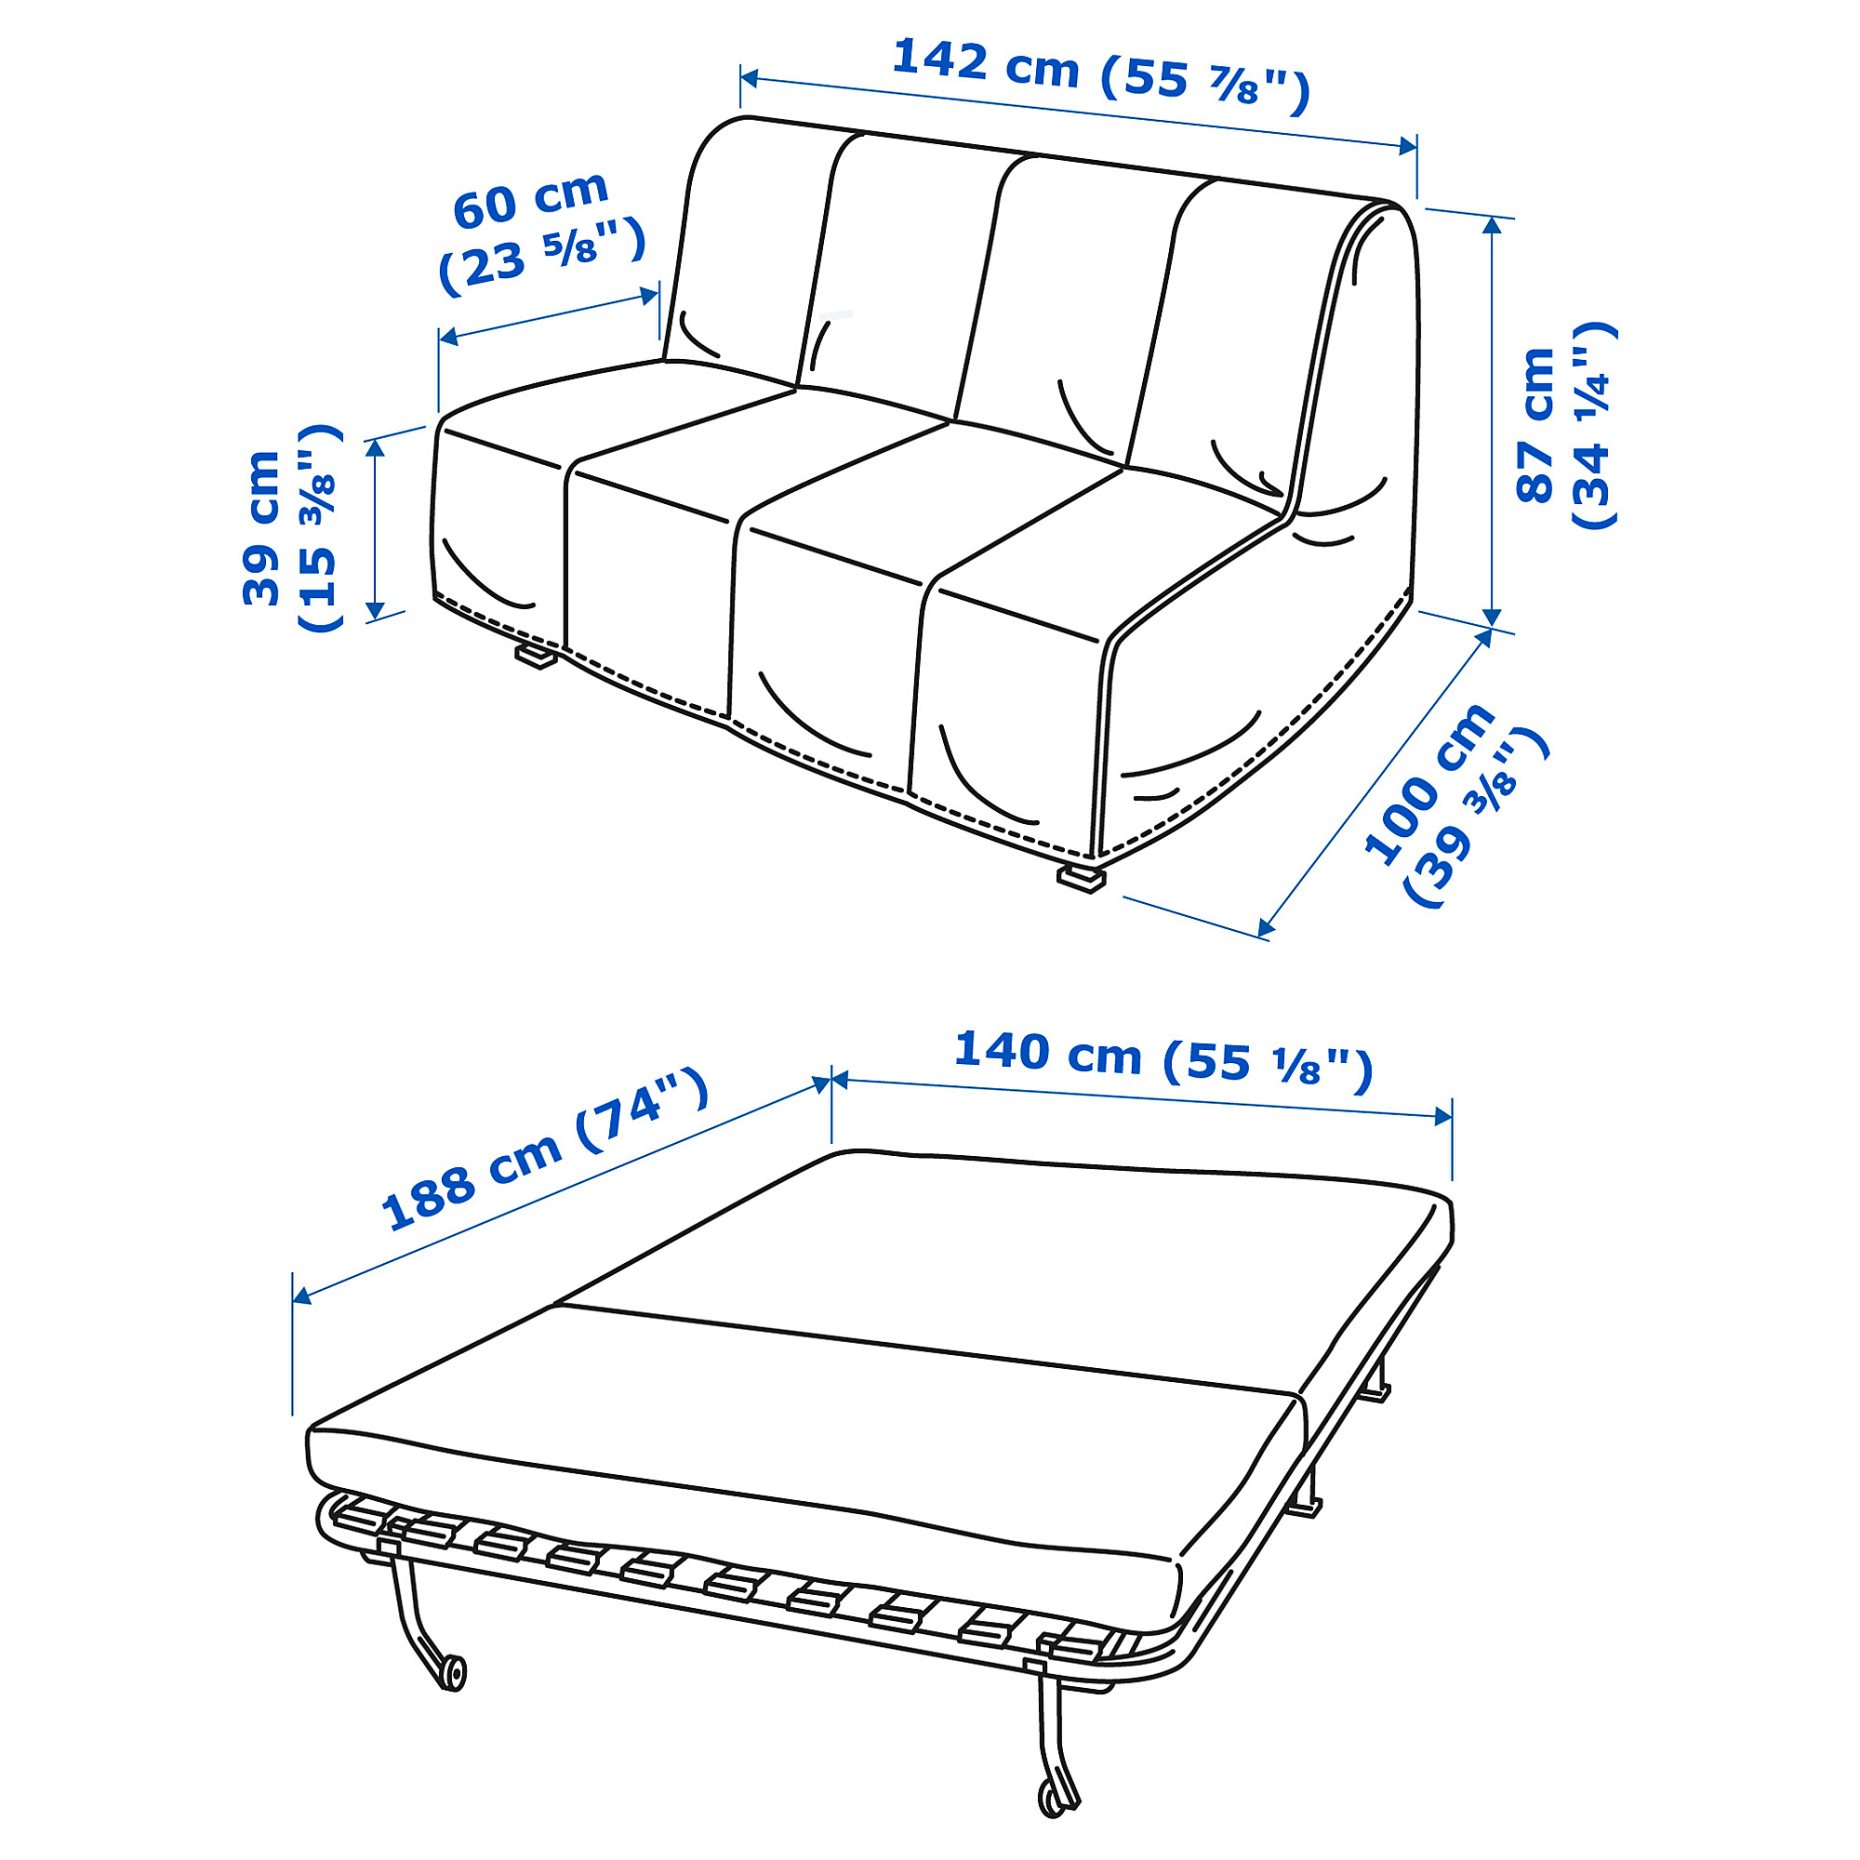 LYCKSELE LOVAS, 2-seat sofa-bed, 593.871.32